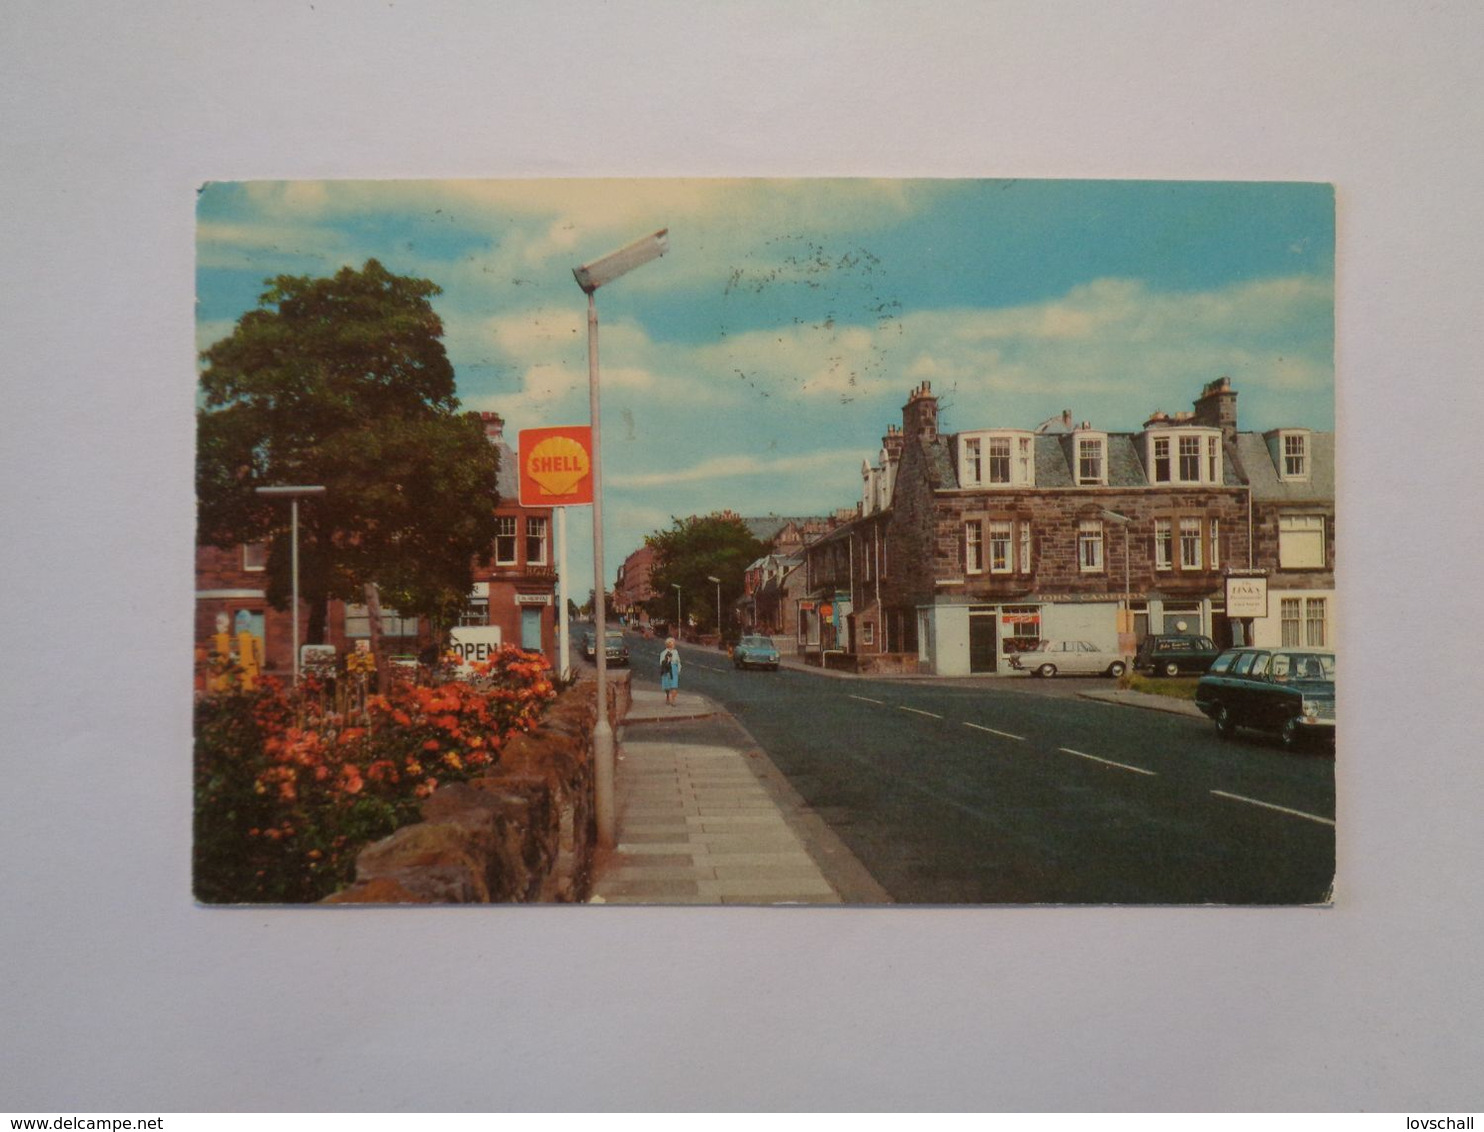 Gullane. - Main Street. (30 - 7 - 1972) - East Lothian